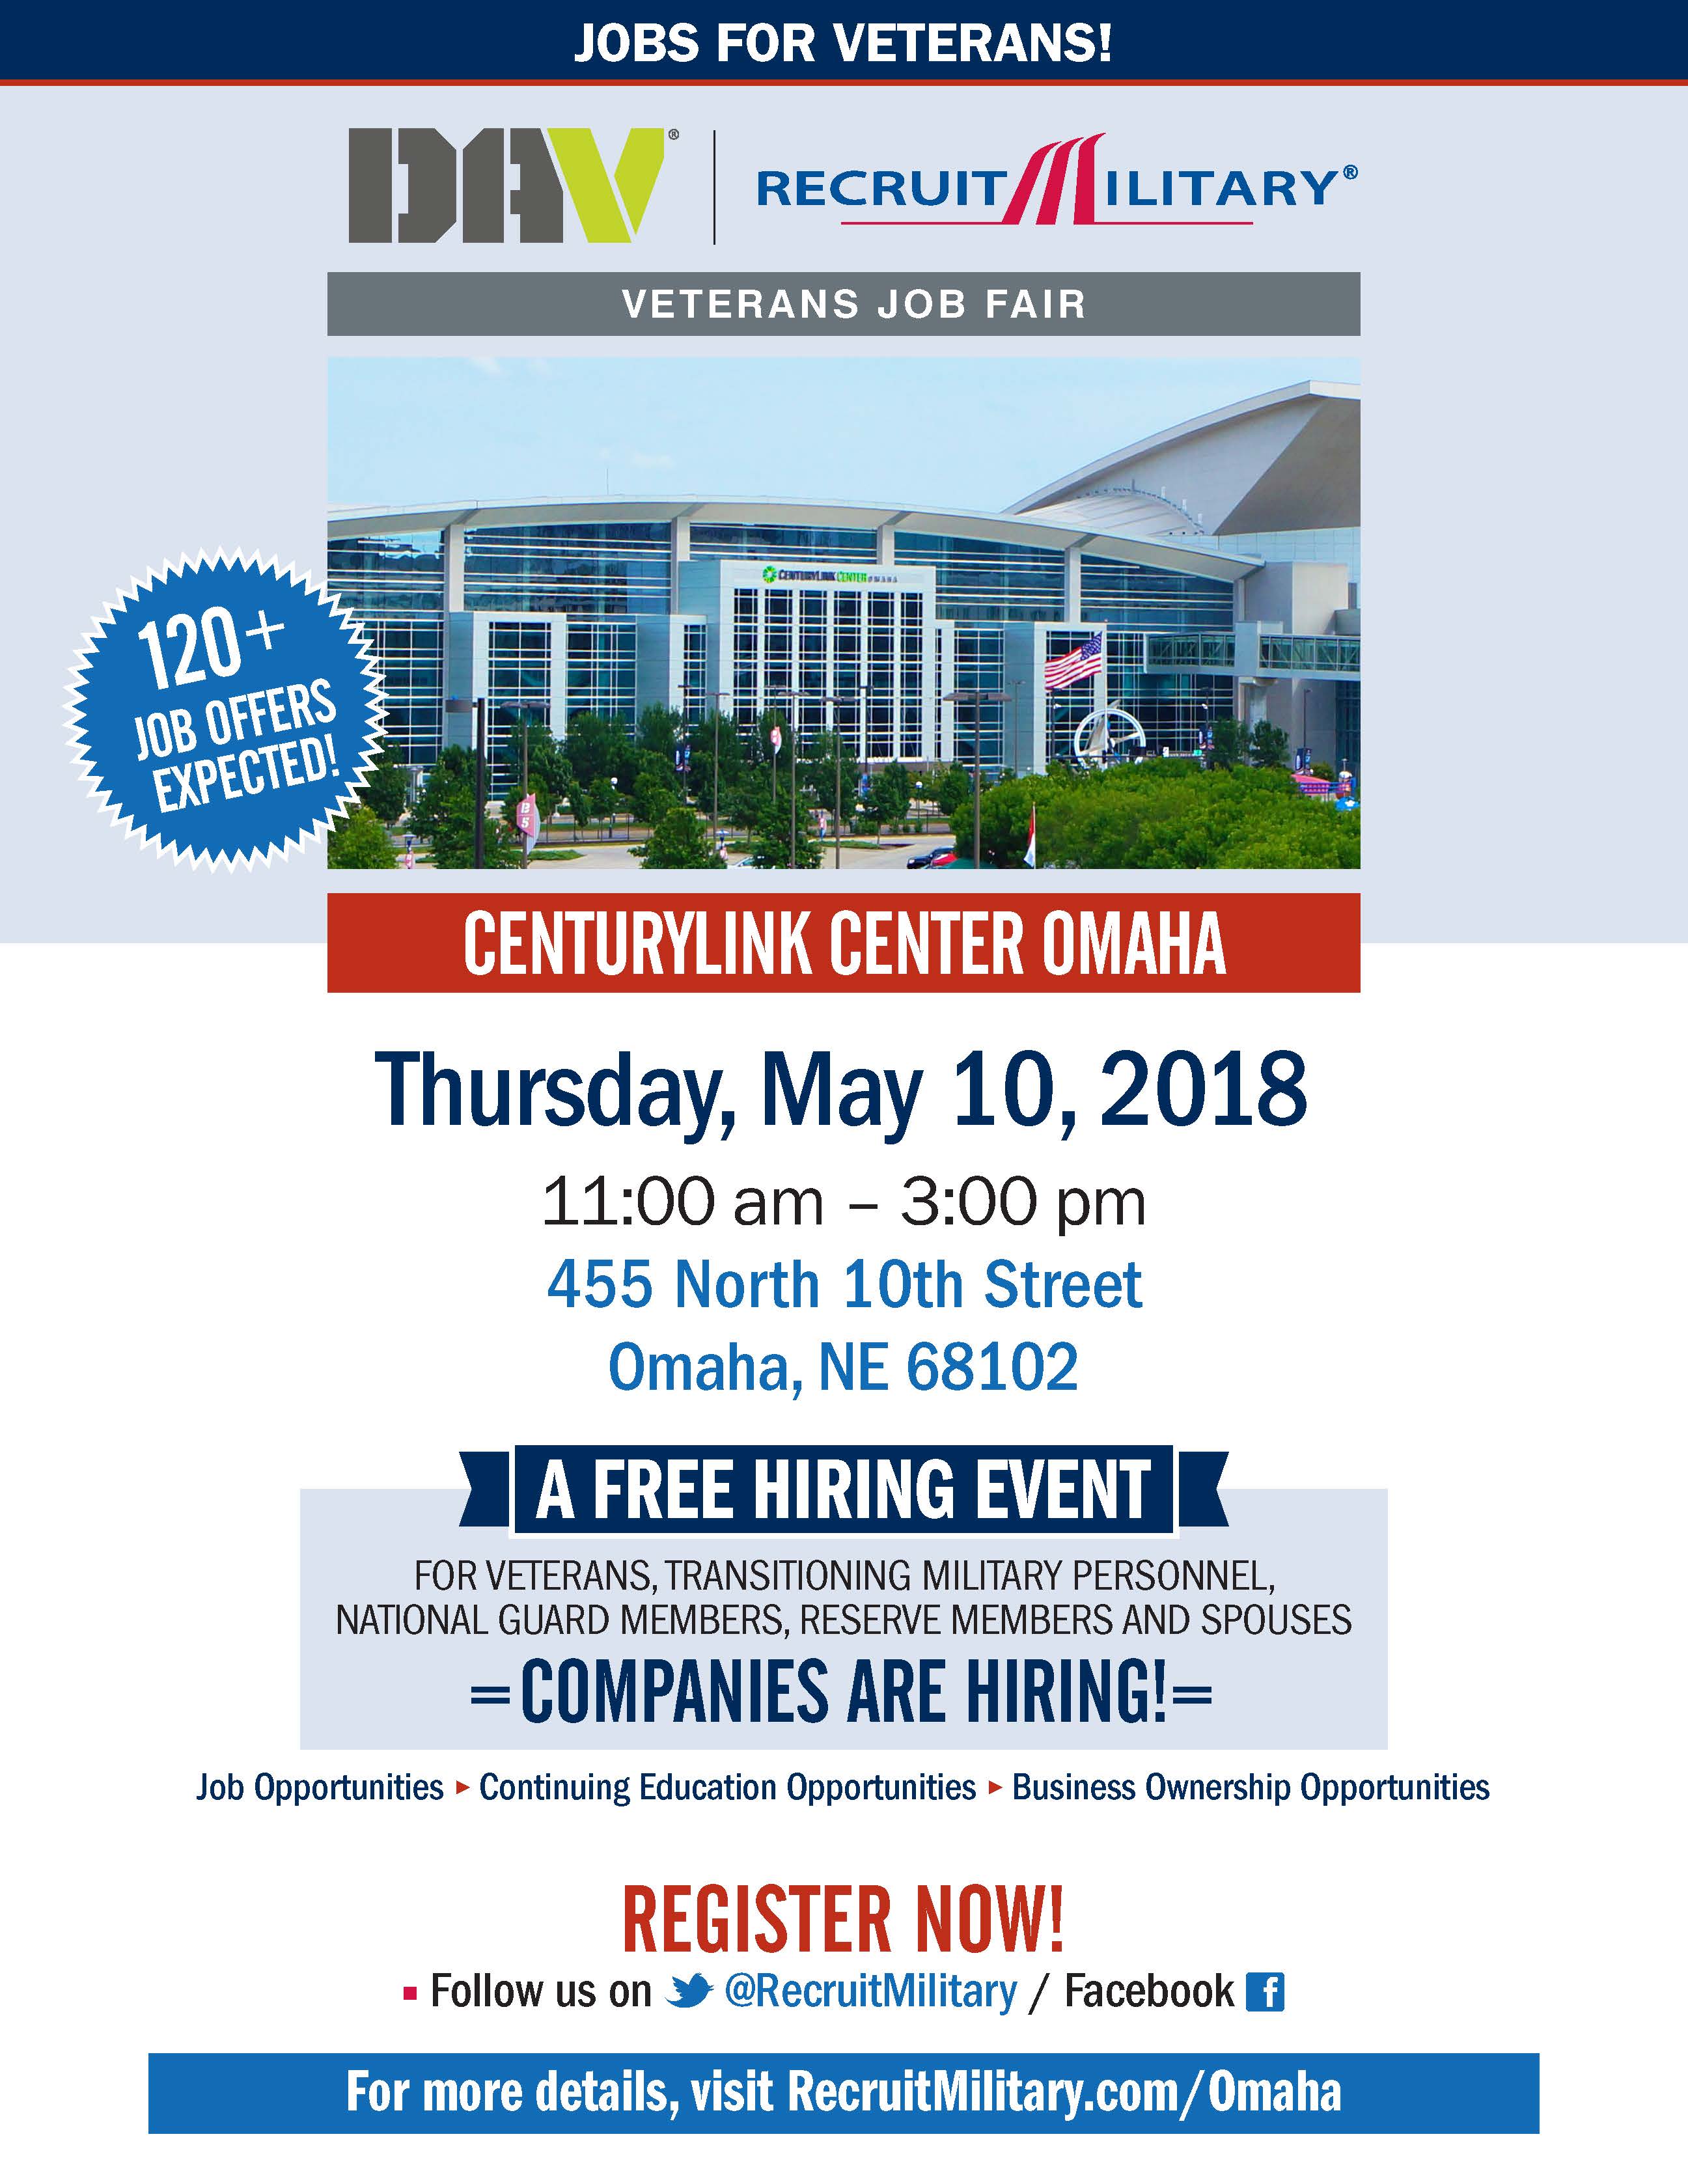 Veterans Job Fair flyer